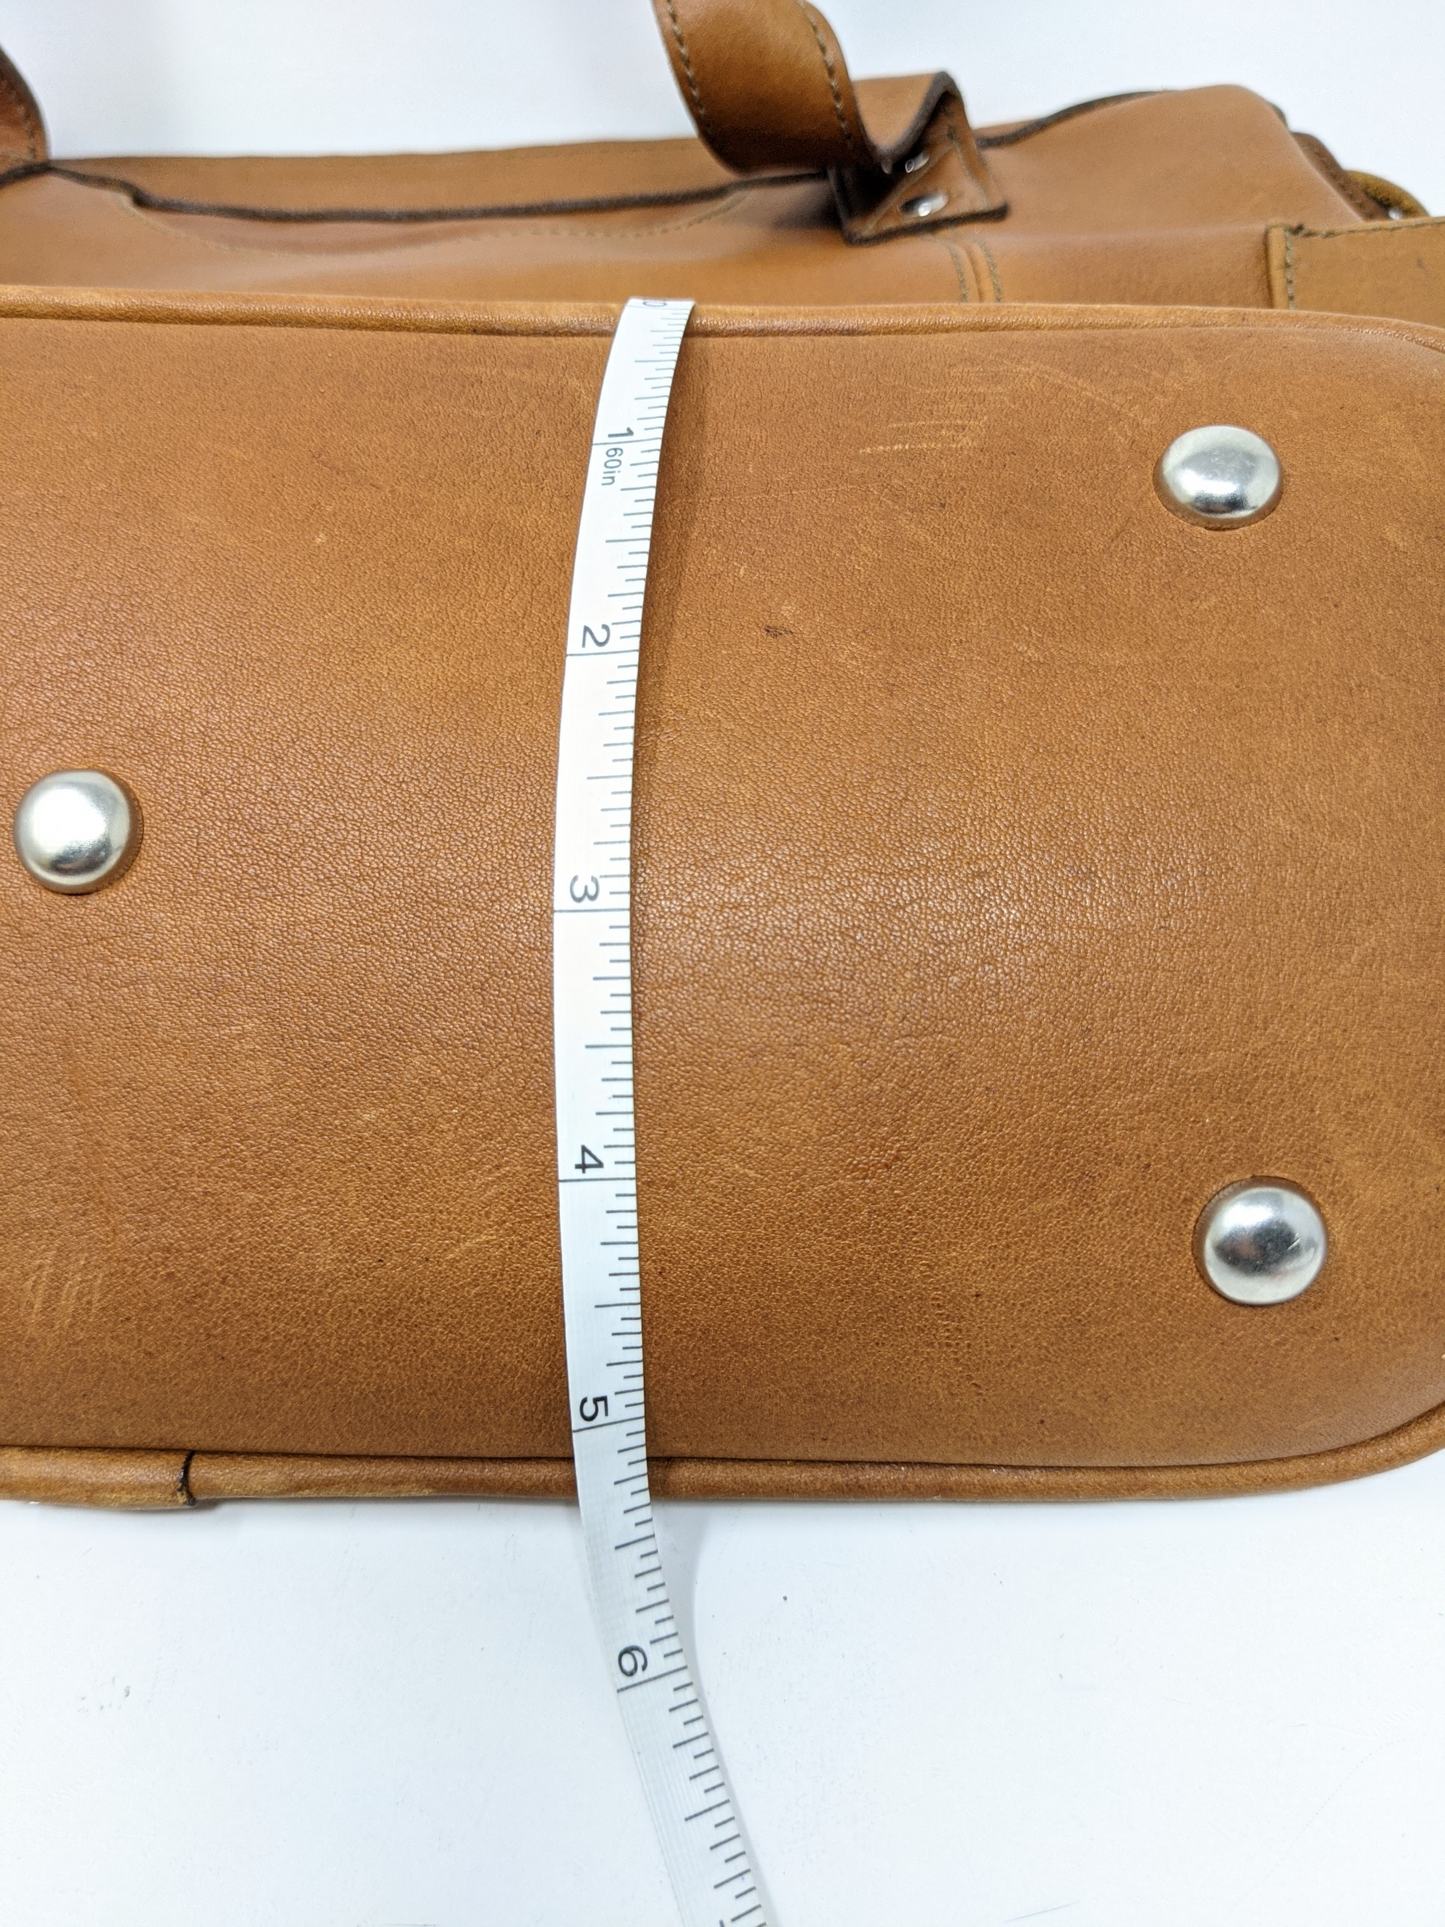 Artisan Bag Convertible Day Bag 100% full grain leather